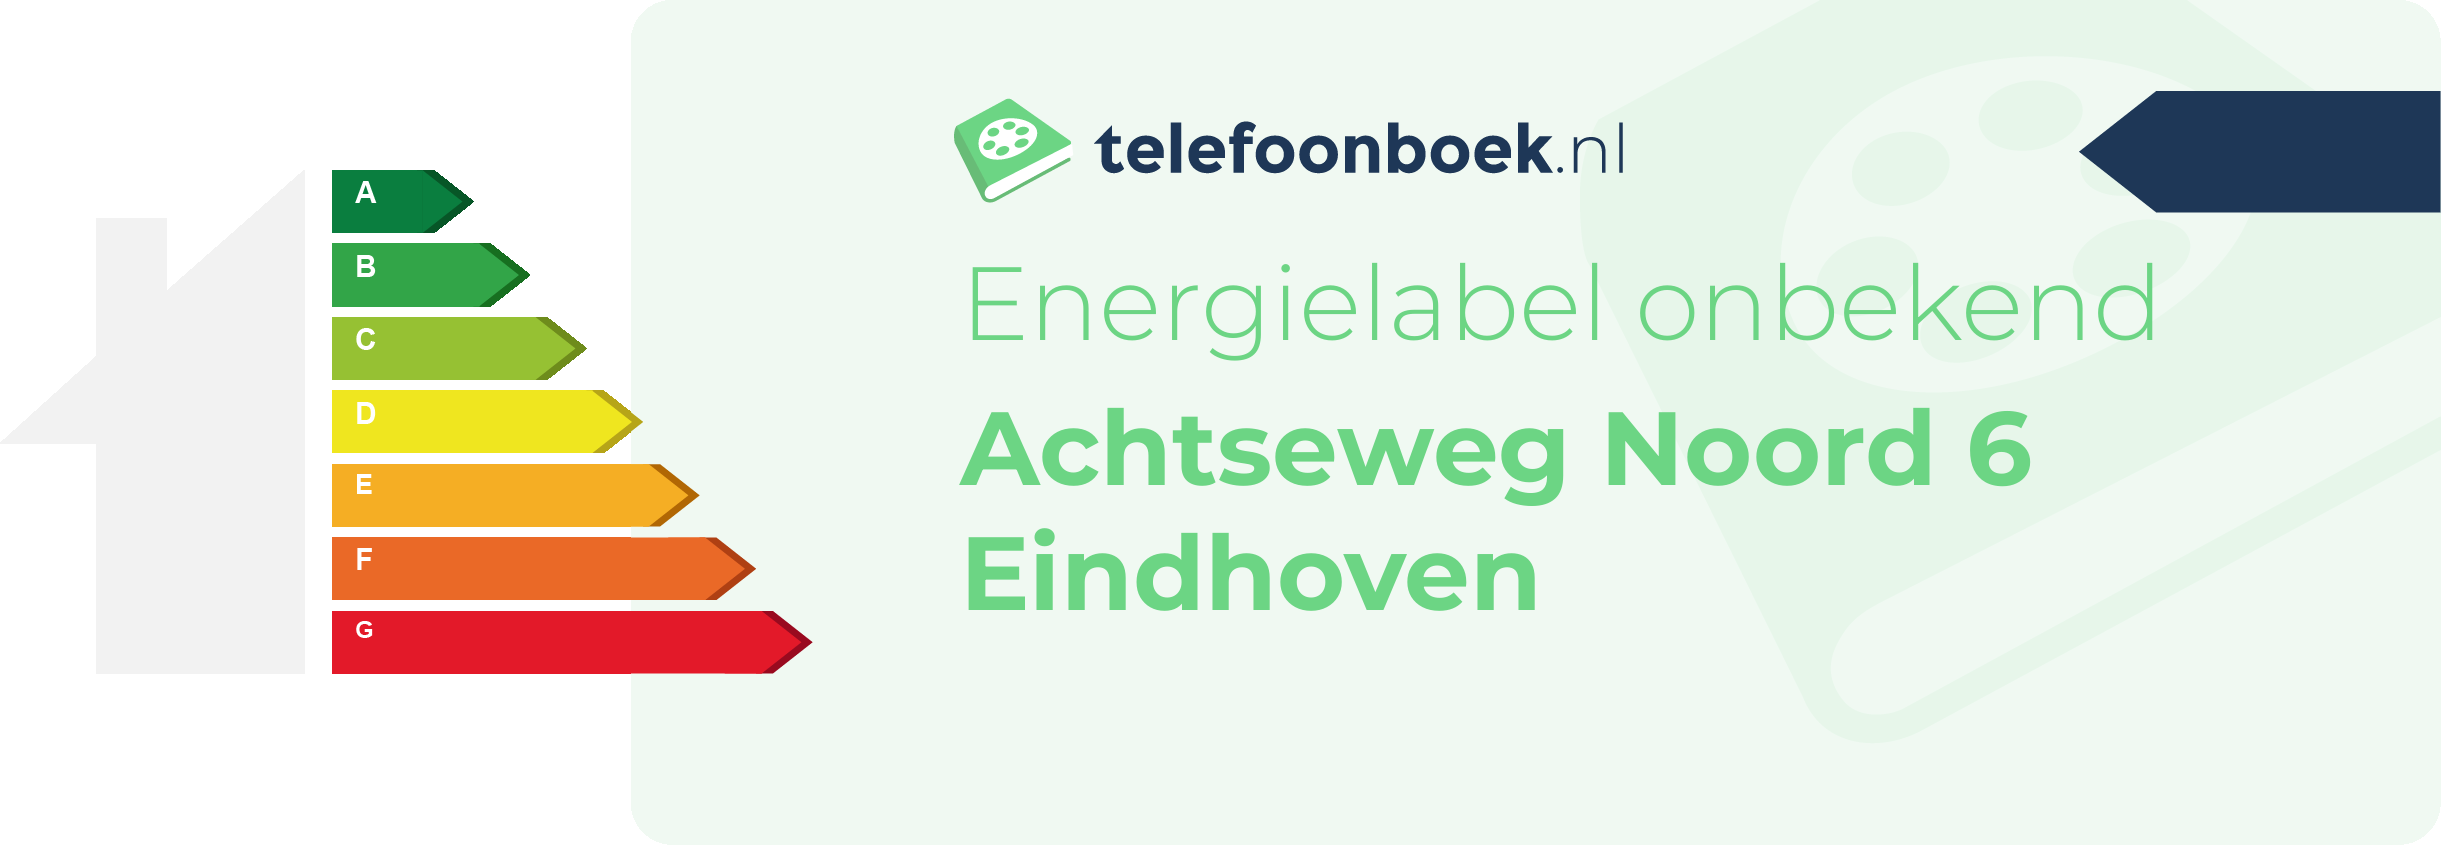 Energielabel Achtseweg Noord 6 Eindhoven